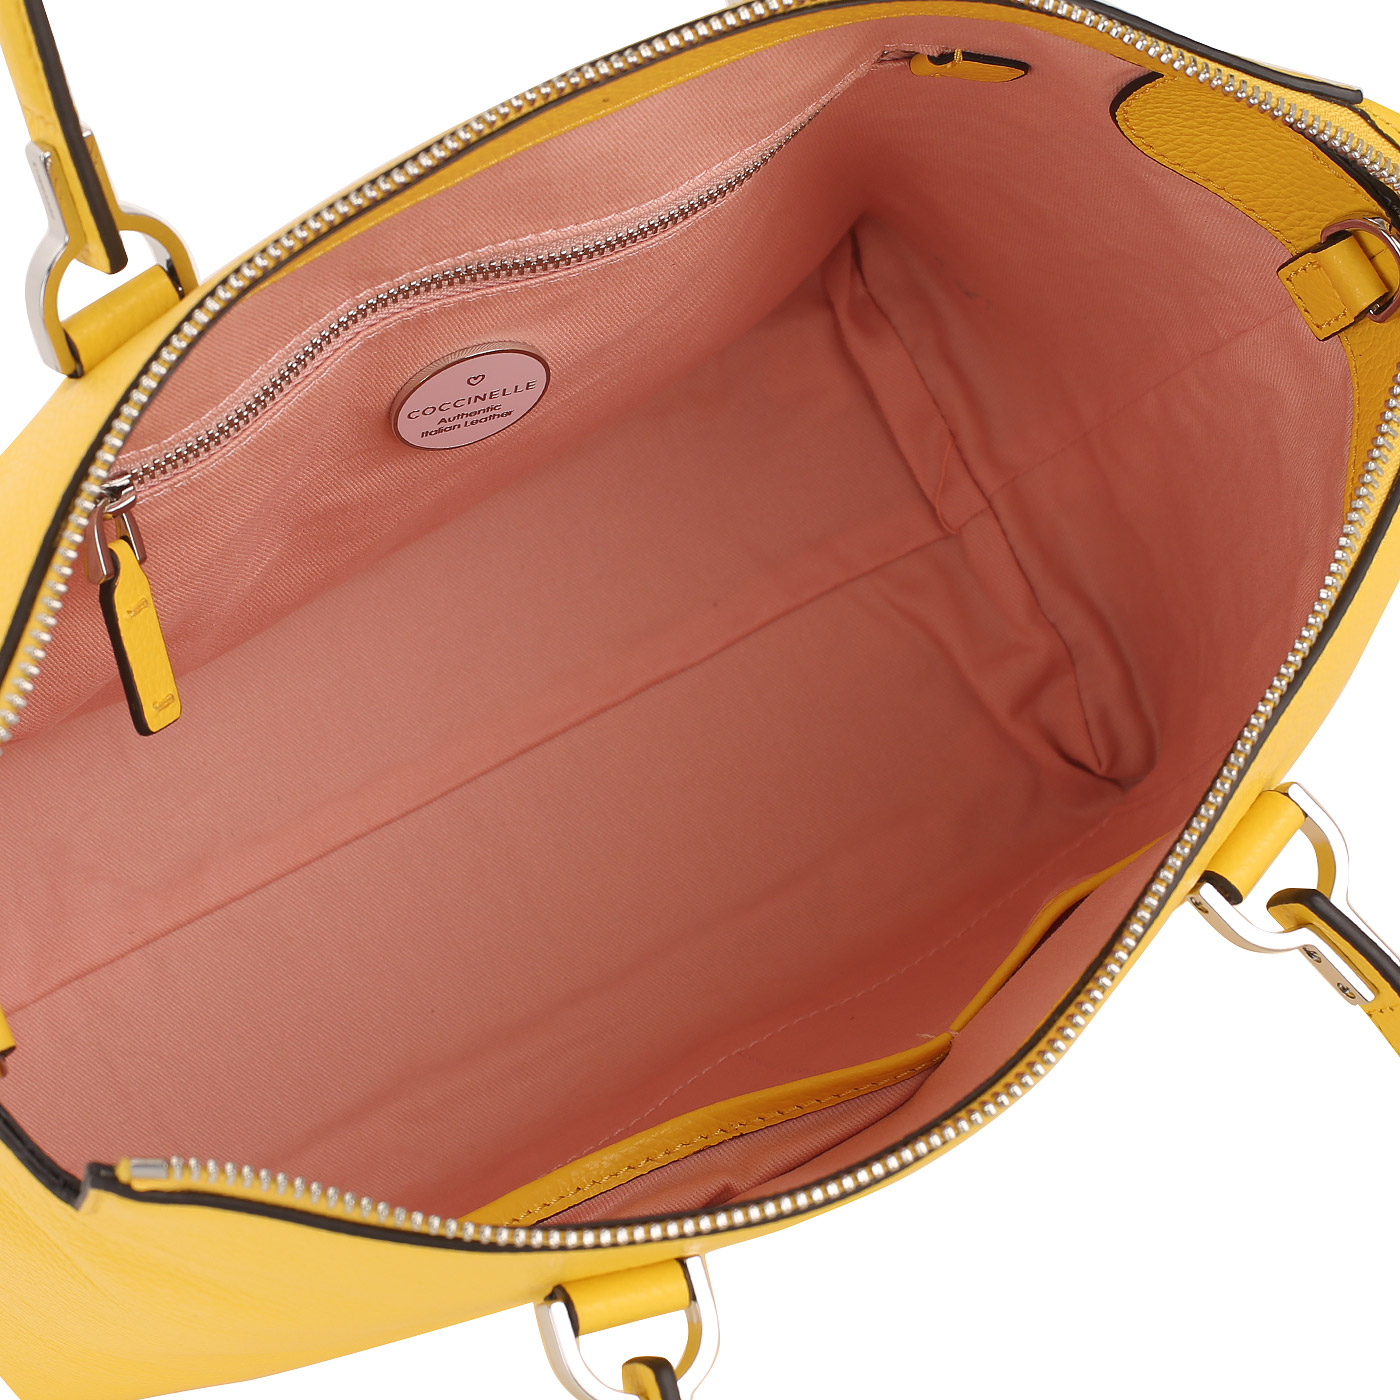 Ярко-желтая сумка Coccinelle Keyla